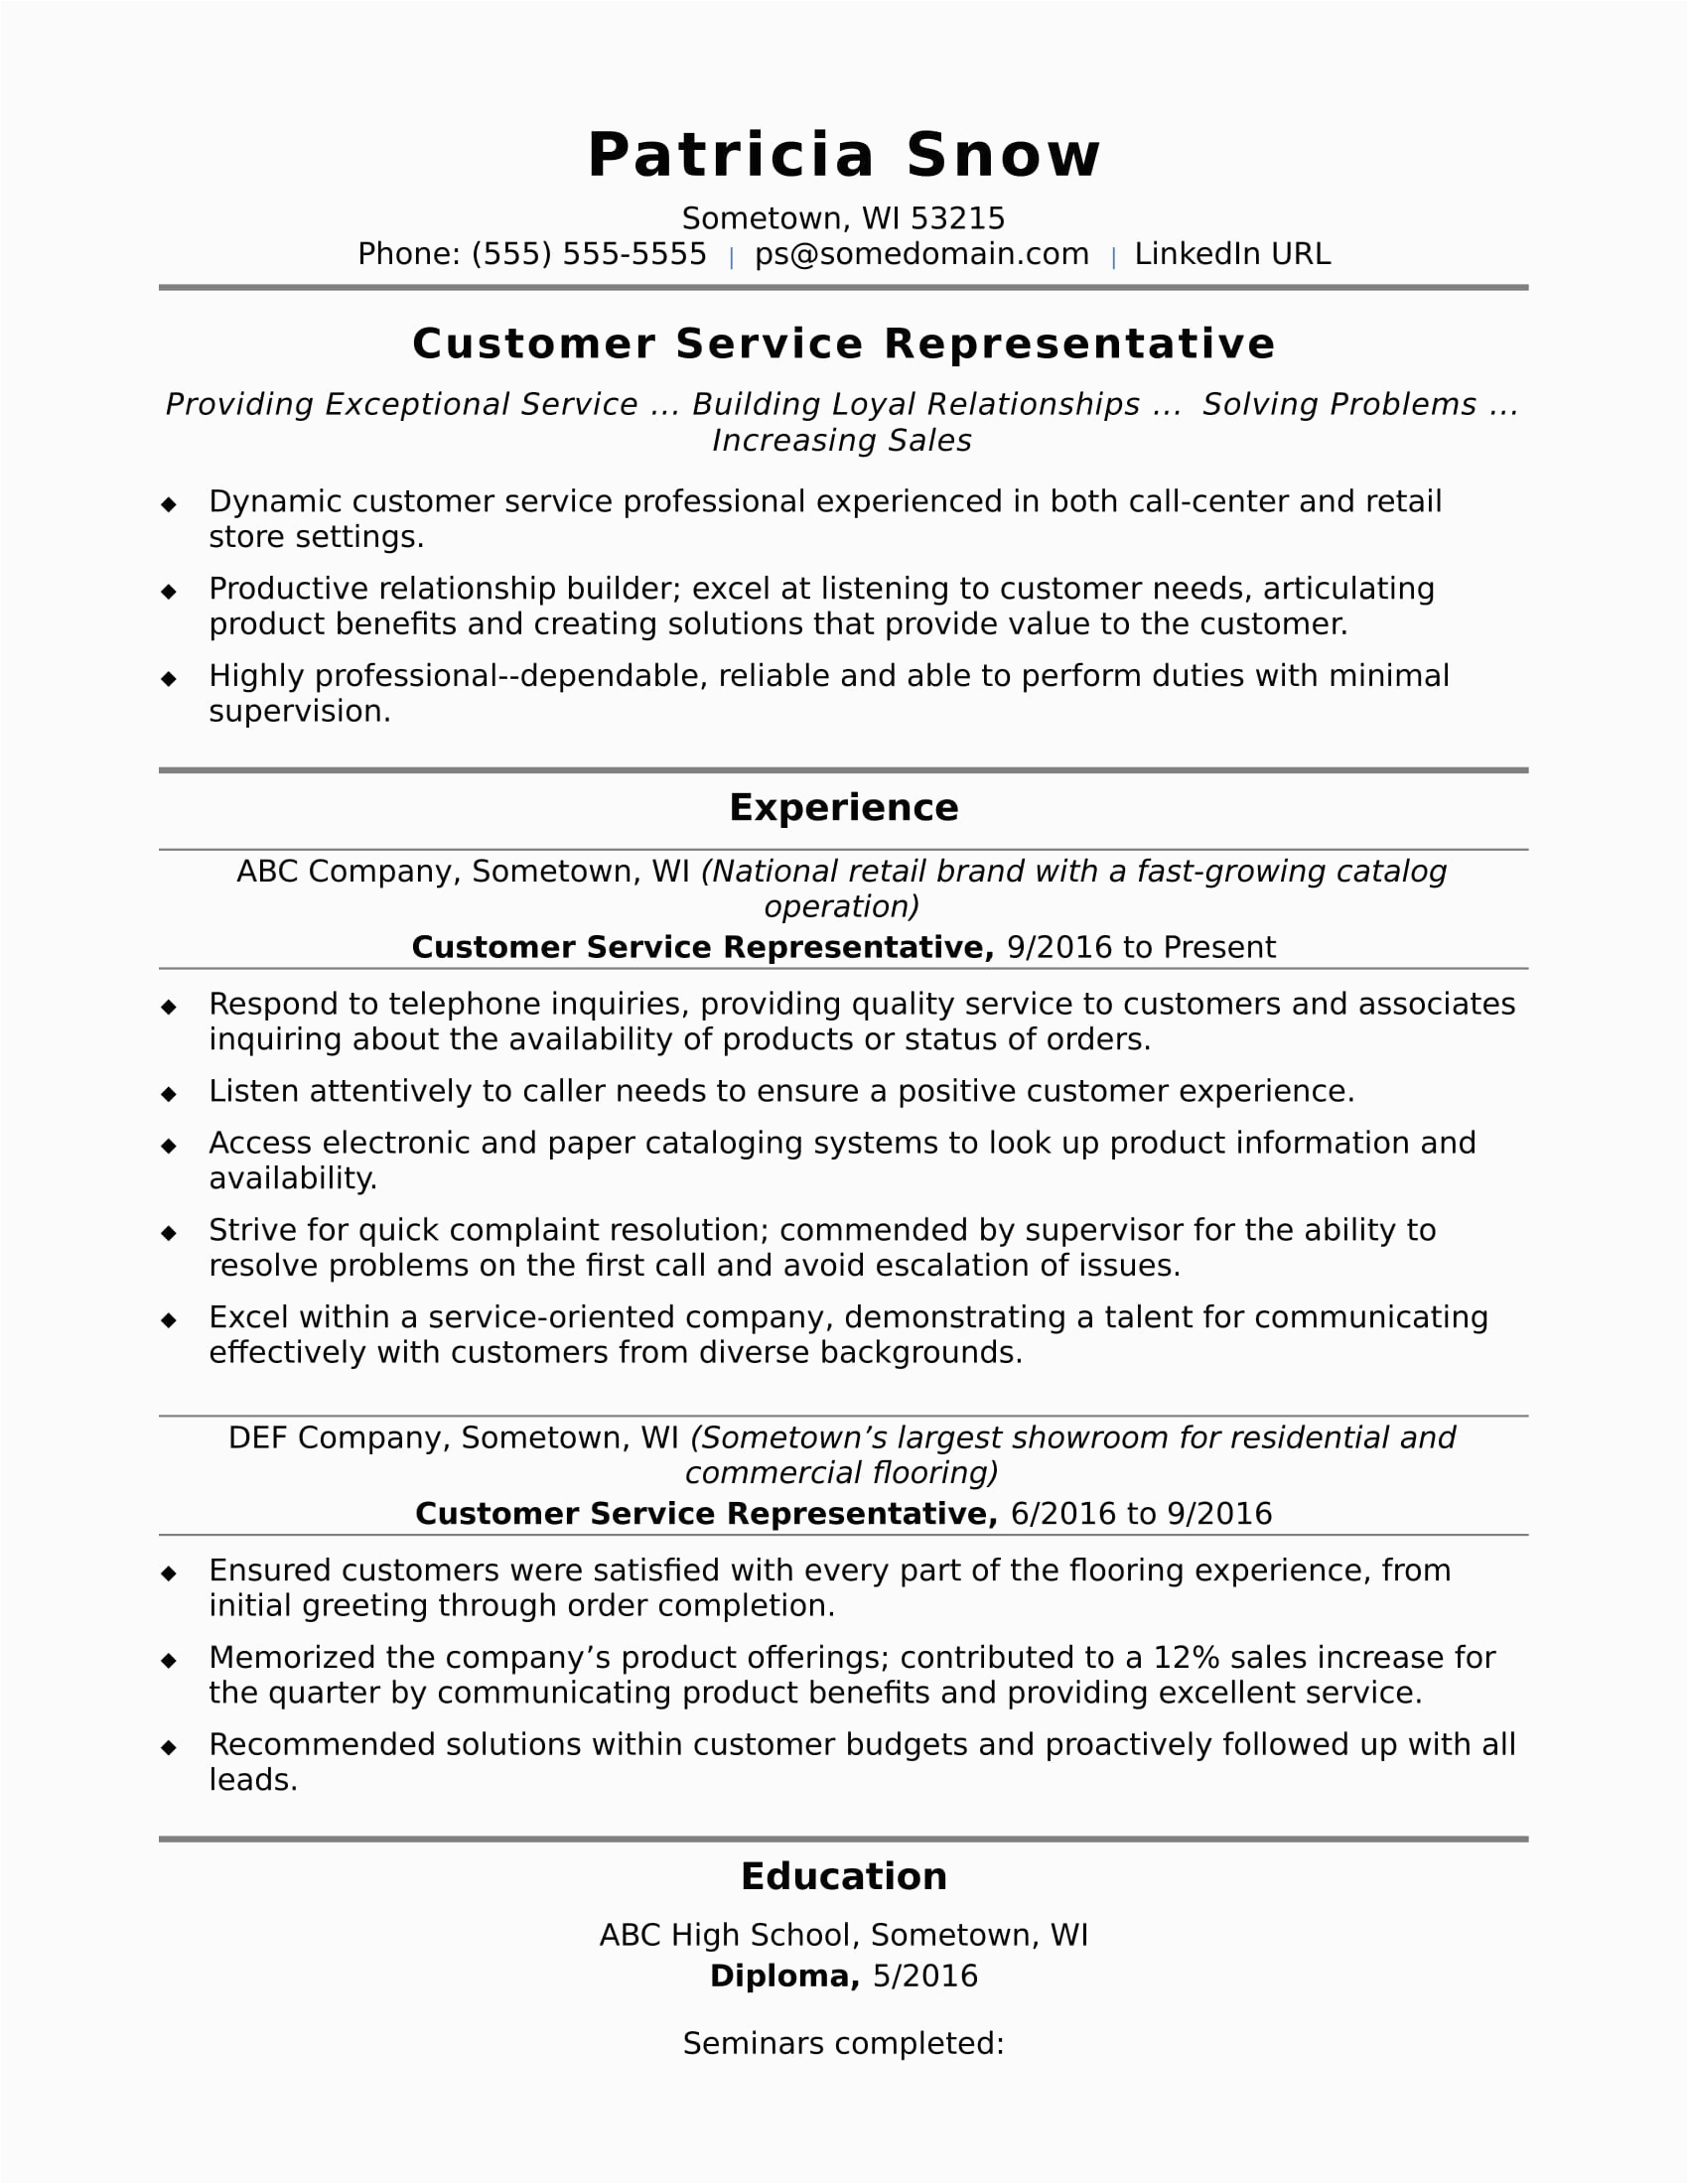 Sample Resume for Customer Service Position Customer Service Representative Resume Sample